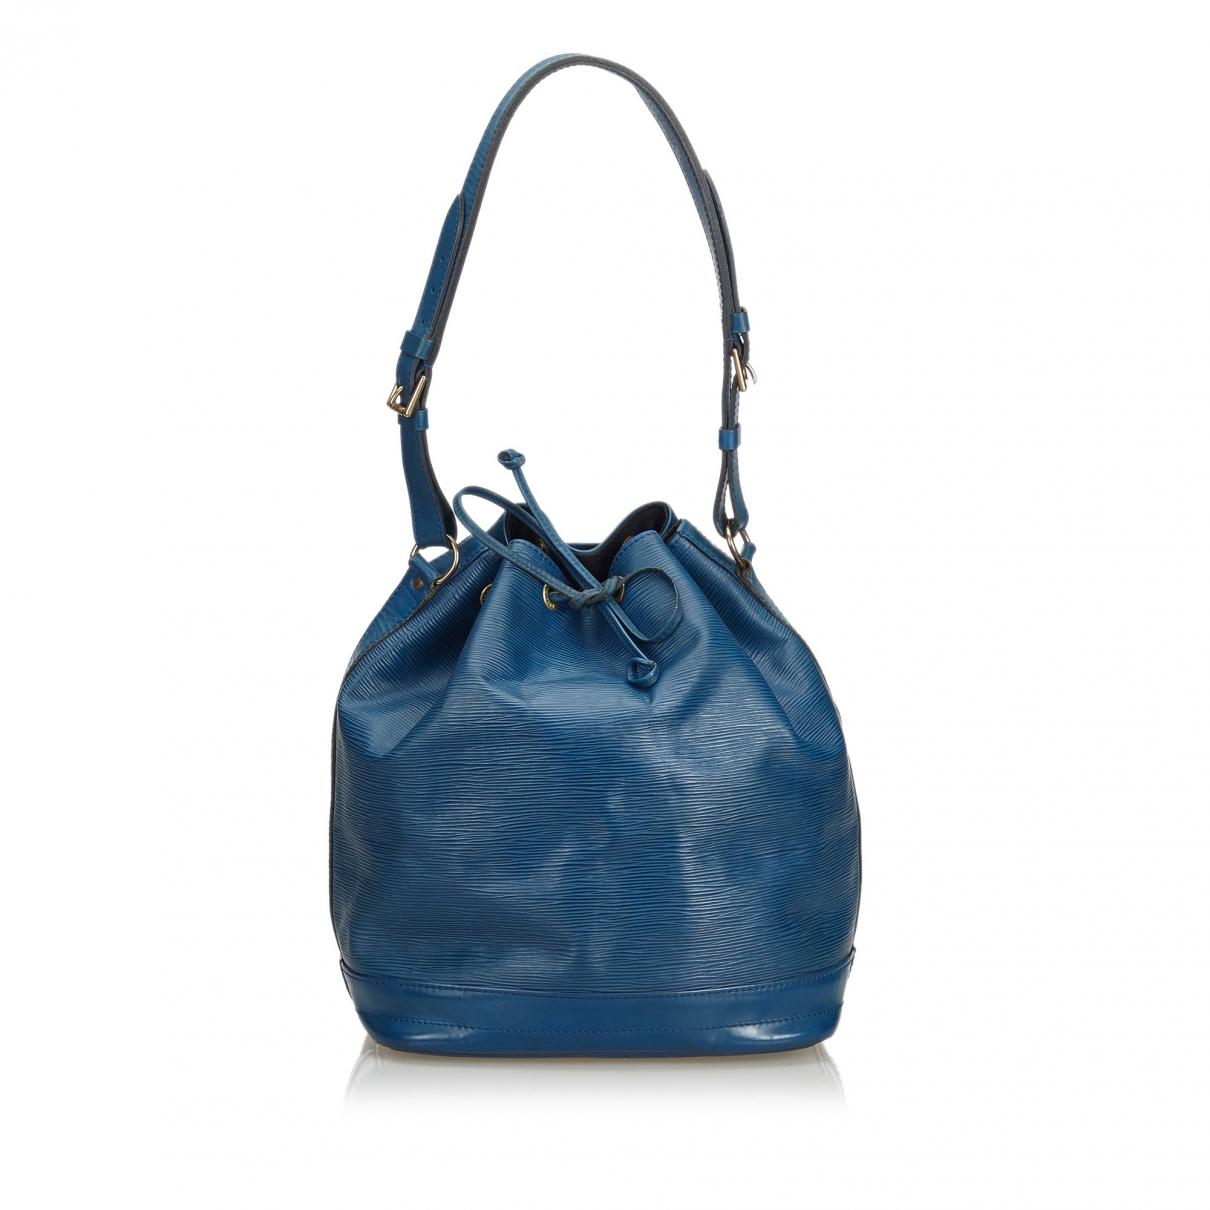 Lyst - Louis Vuitton Pre-owned Vintage Noé Blue Leather Handbags in Blue